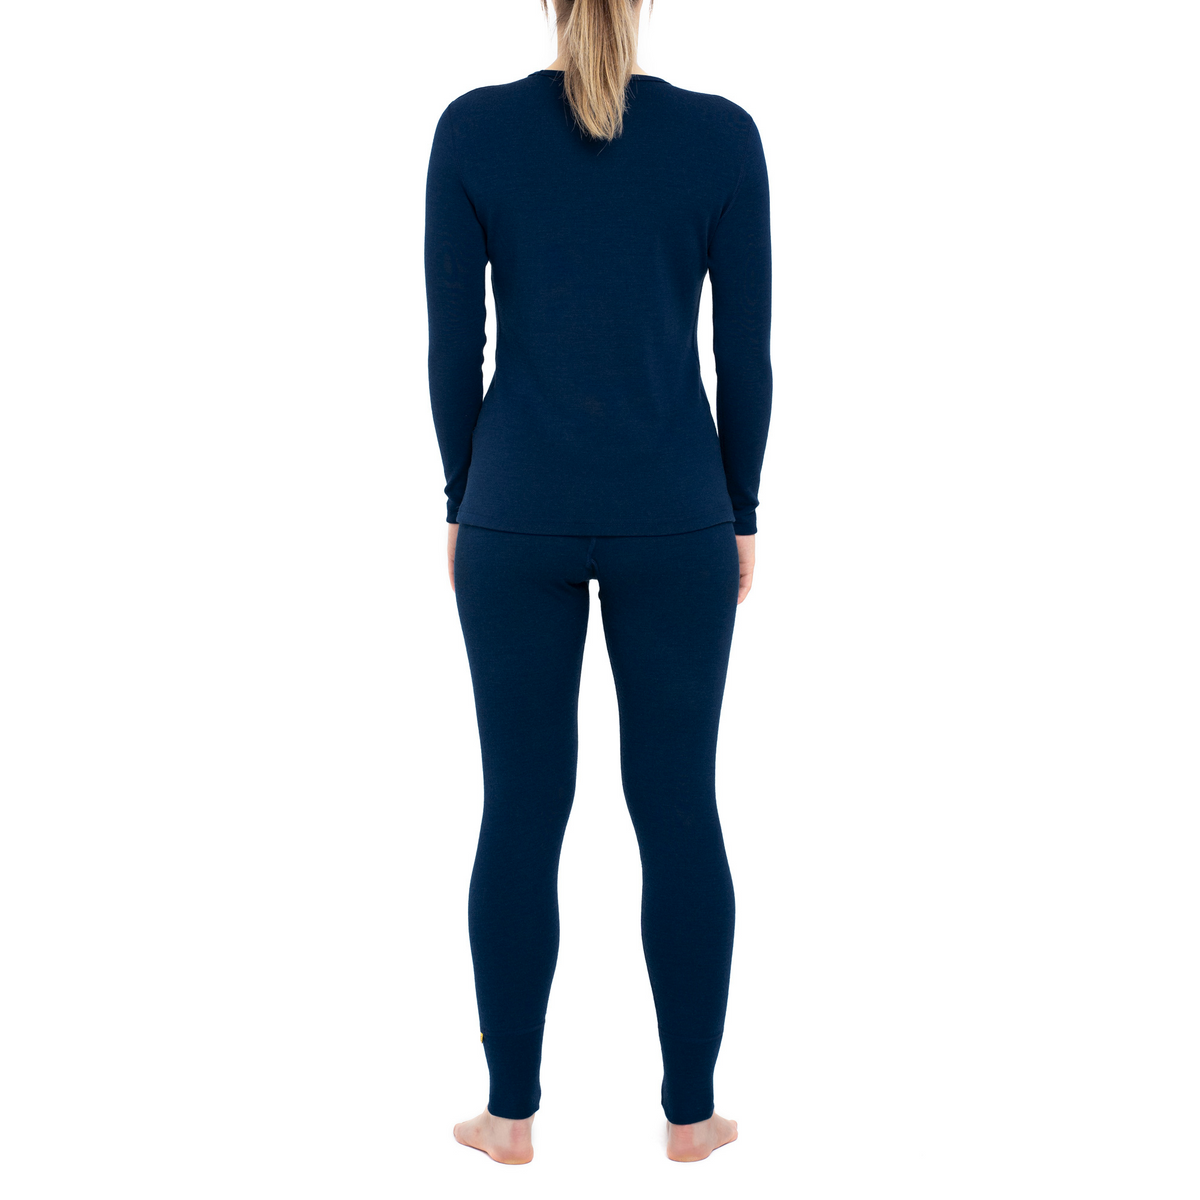 MENIQUE 100% Merino Wool Womens Long Sleeve & Bottoms 2-Piece Dark Blue